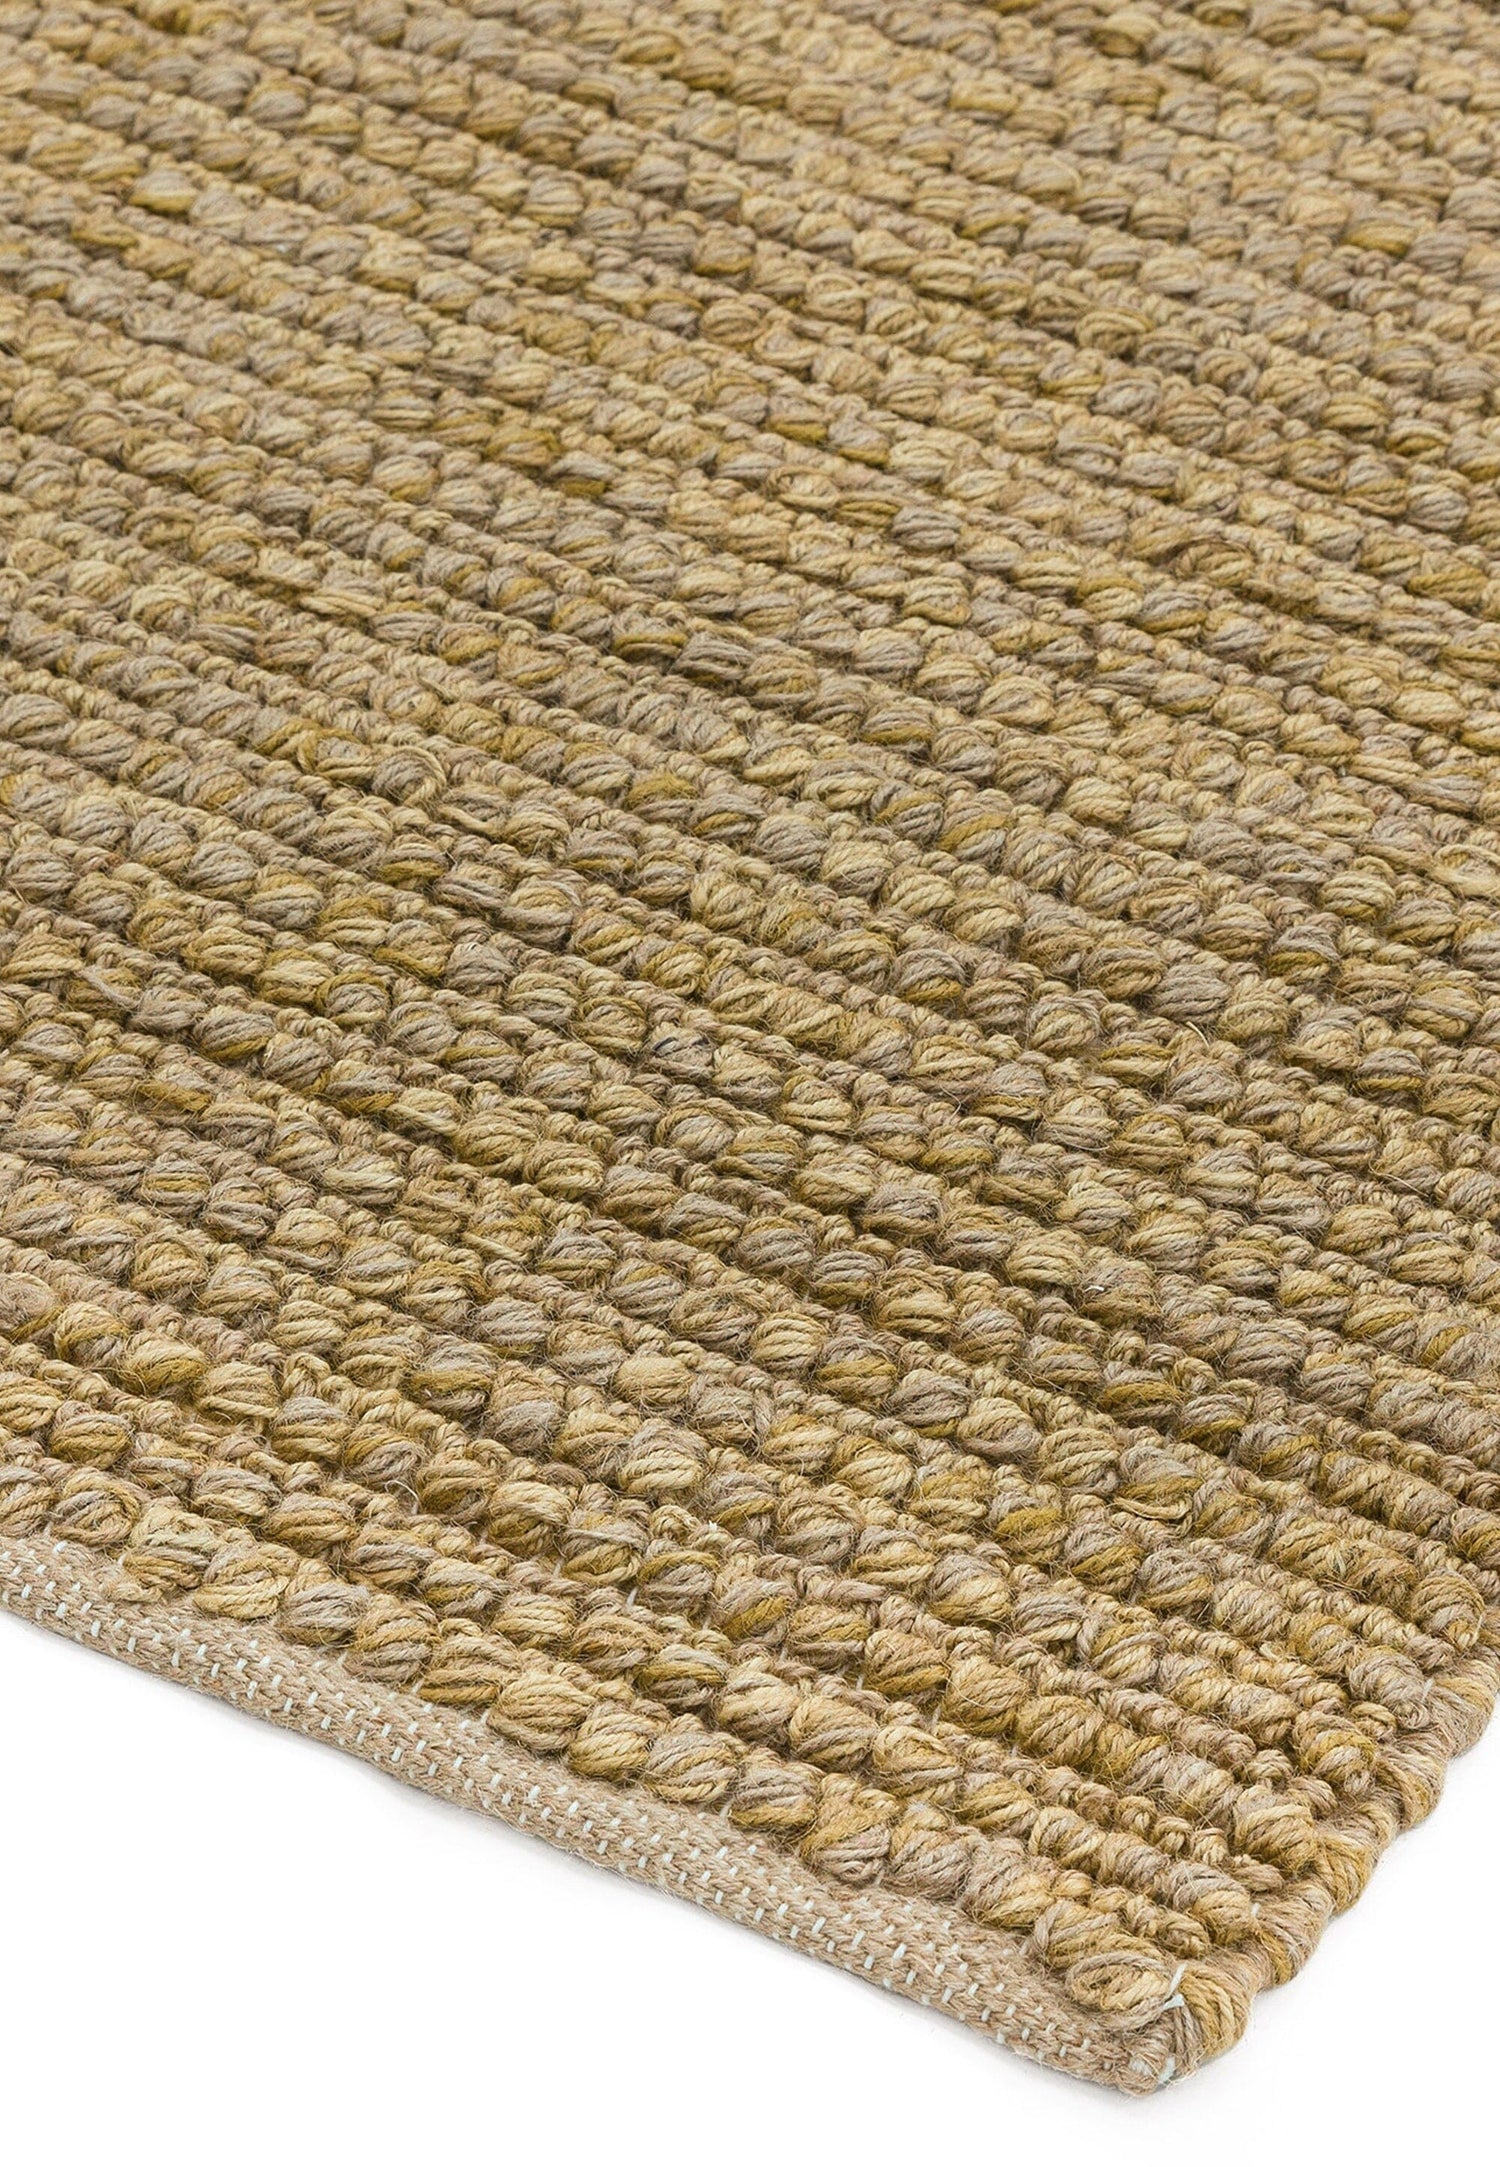  Asiatic Carpets-Asiatic Carpets Jute Loop Hand Woven Rug Natural - 120 x 180cm-Beige, Natural 709 